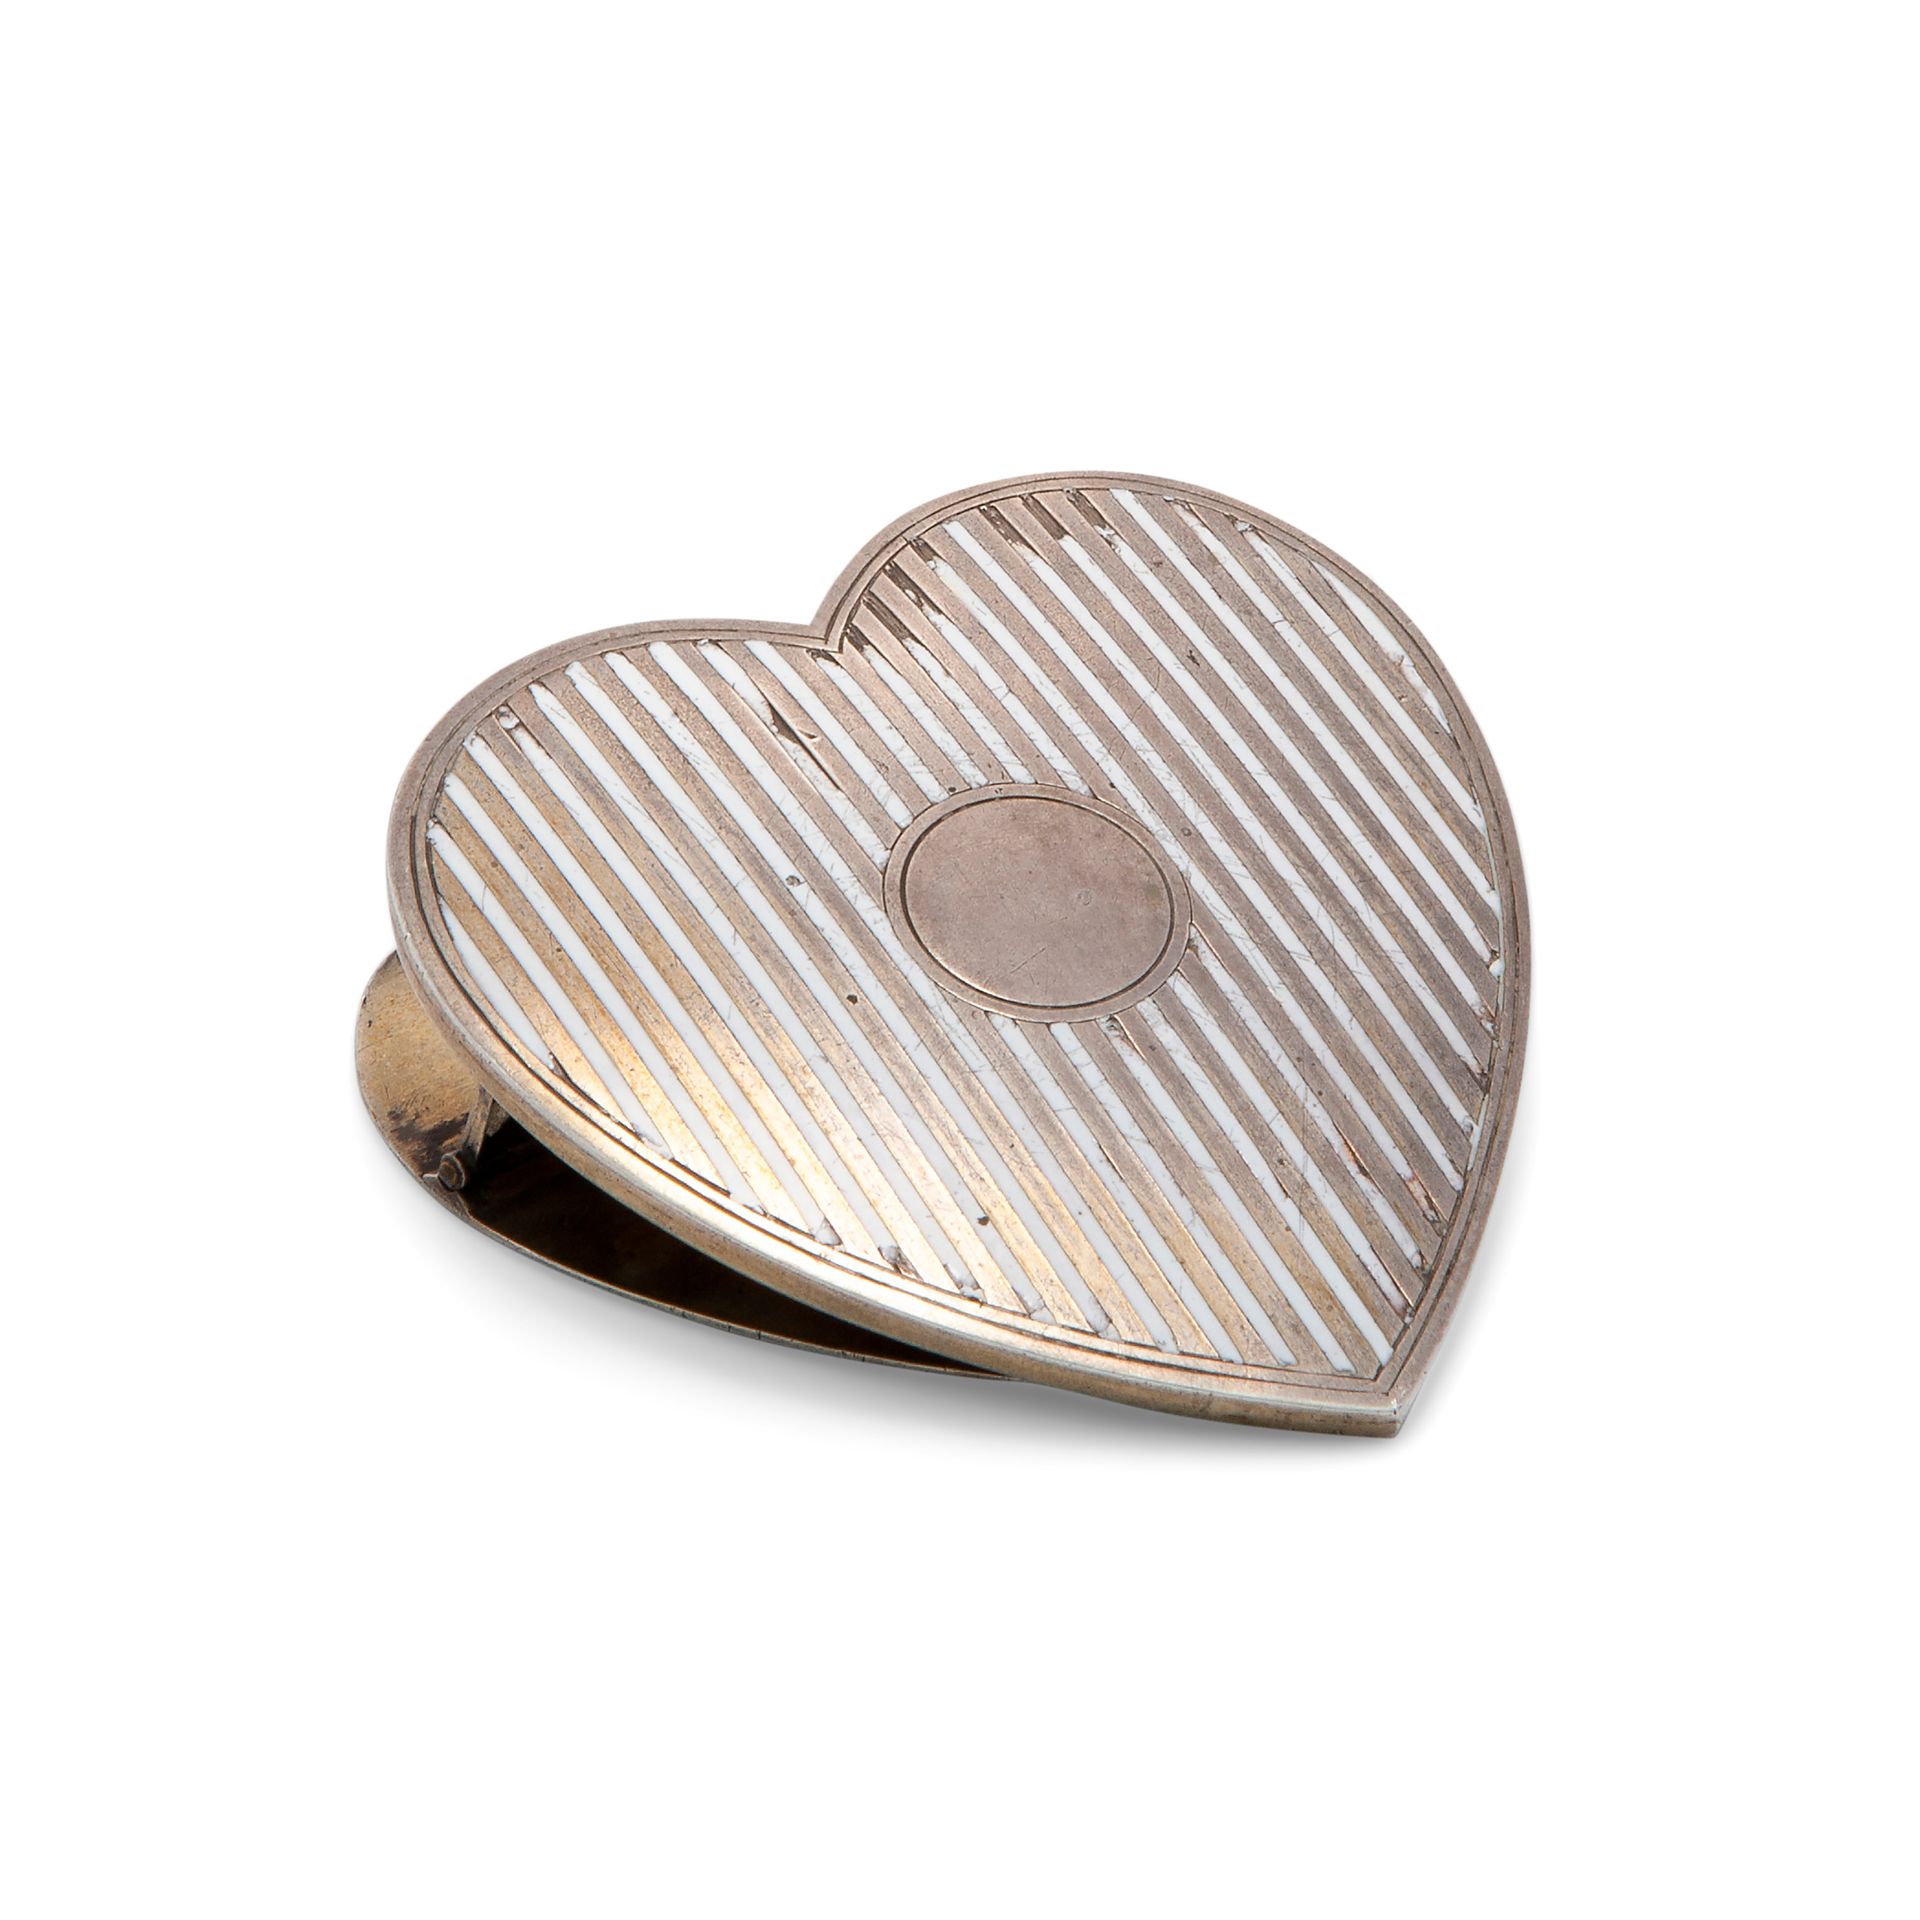 French Liberty heart clip 印记表明 "Dreyfous "的生产，该作品由银和珐琅制成；总重量为60克。